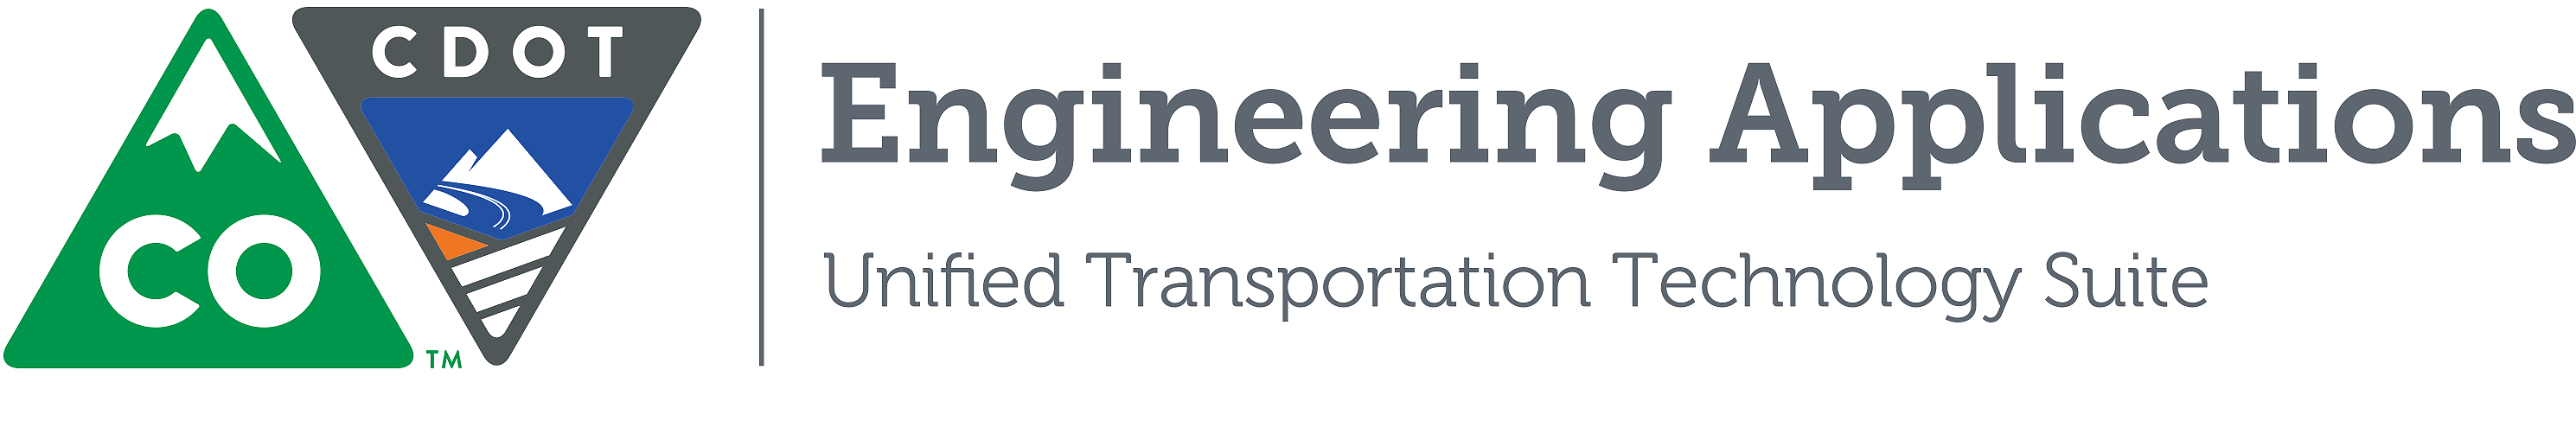 Engineering Applications Logo detail image